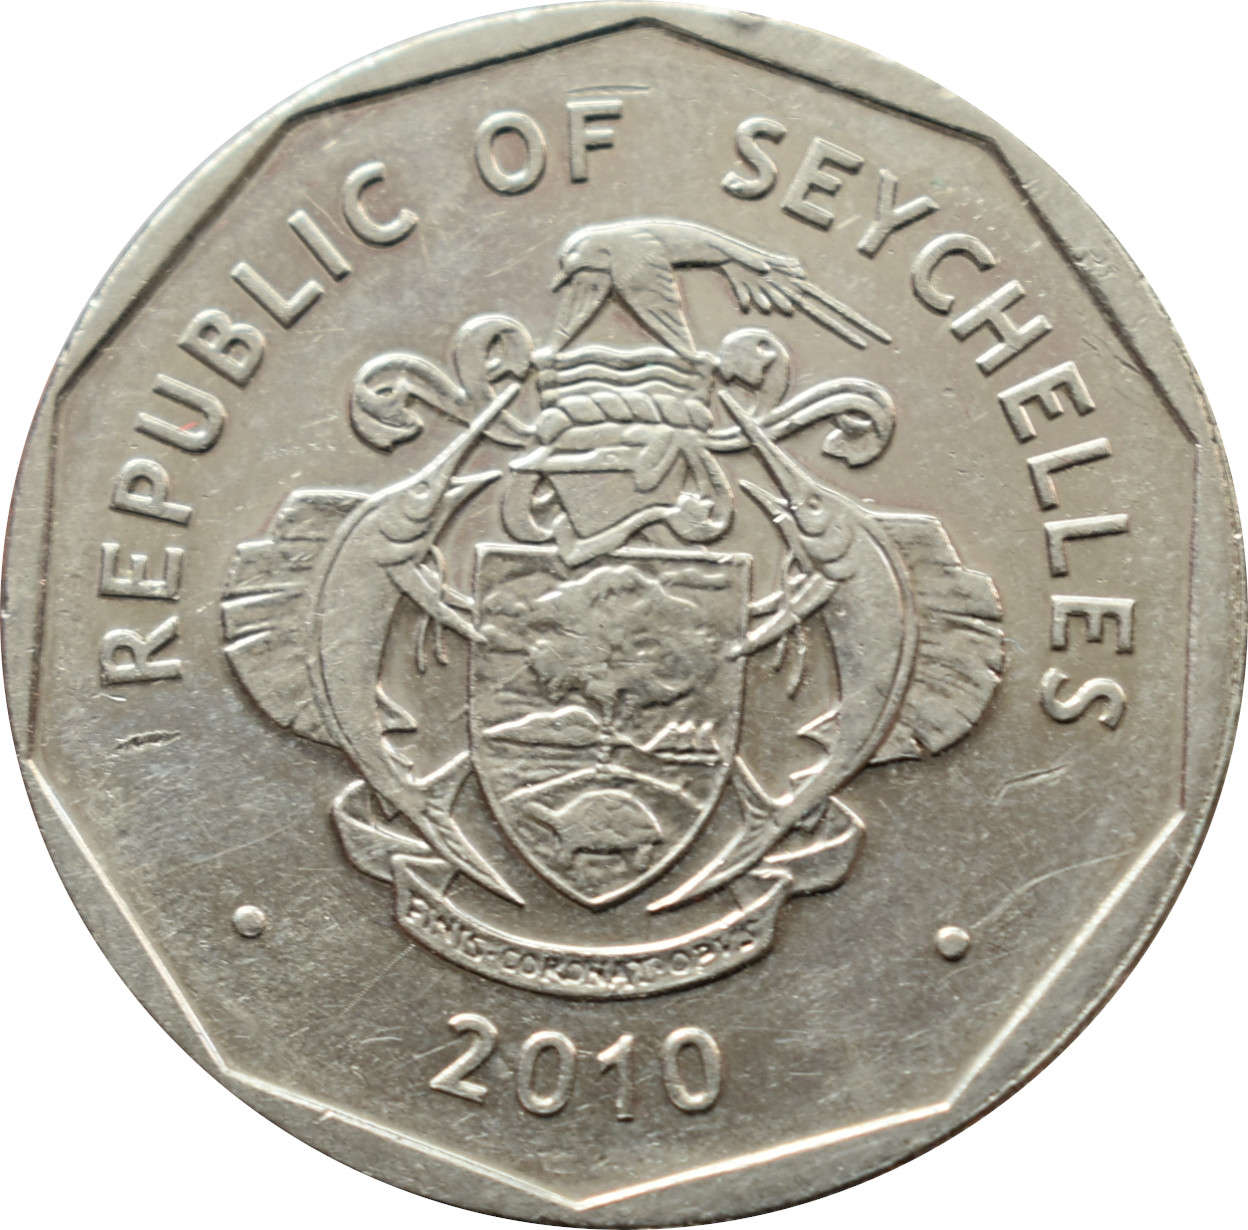 Seychely 5 Rupees 2010